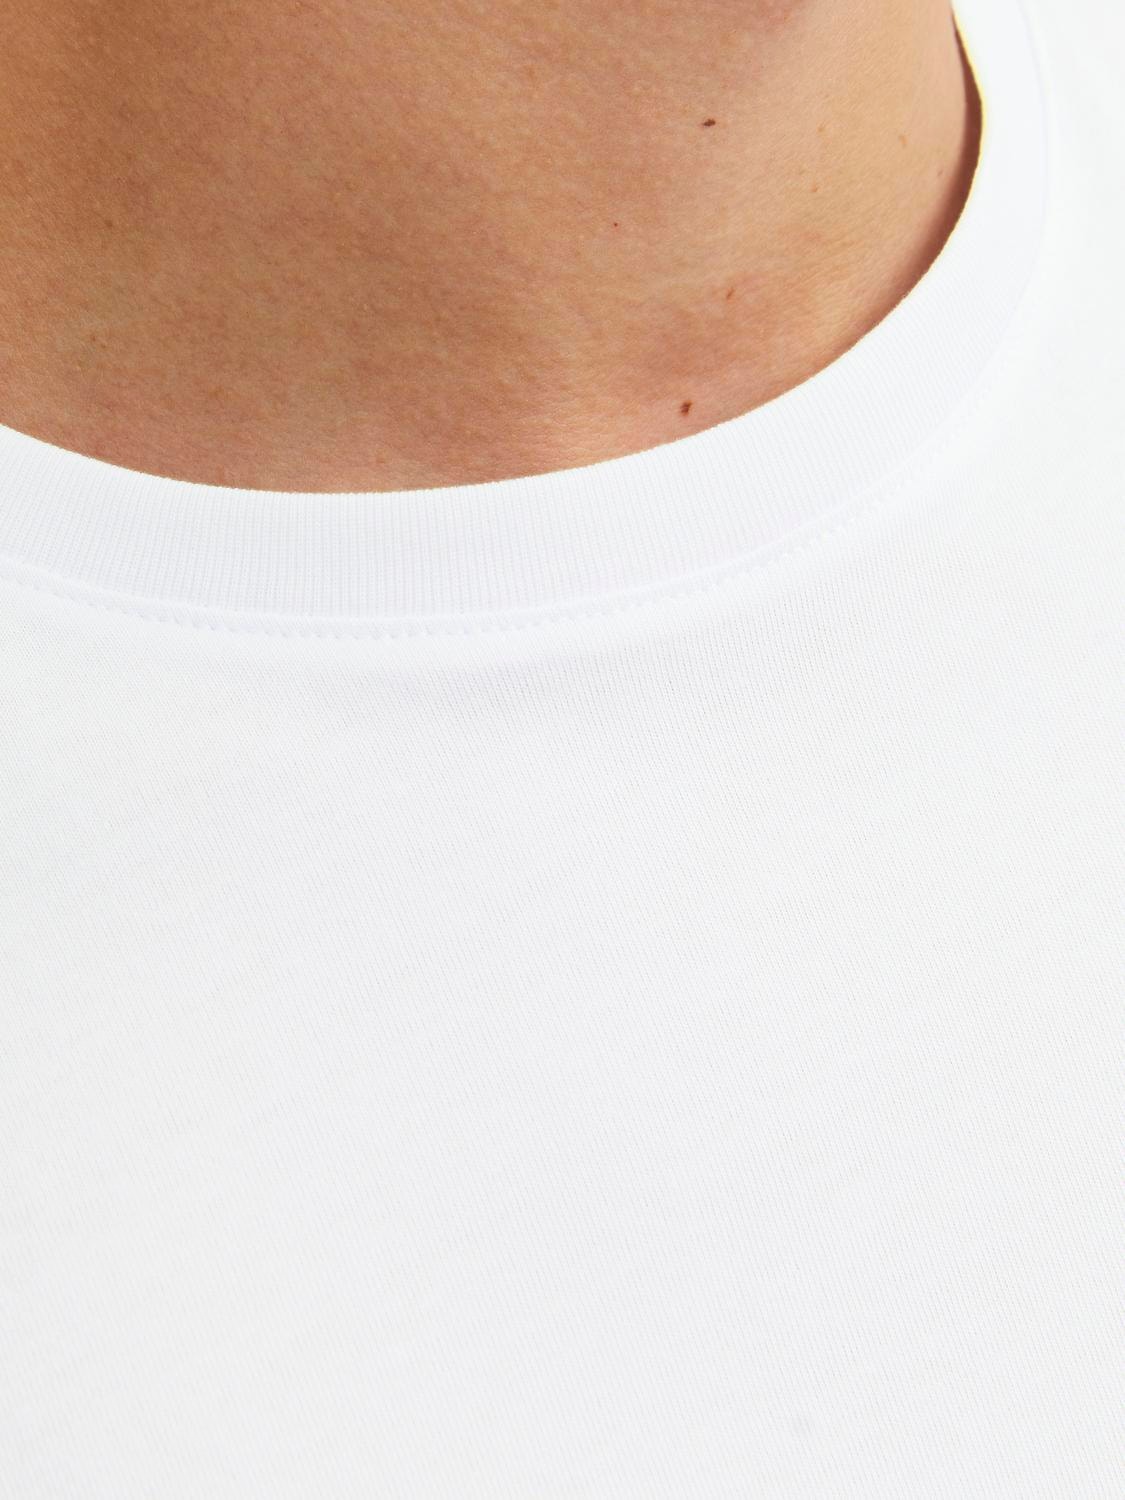 Jack & Jones Logo Crew neck T-shirt -White - 12233999